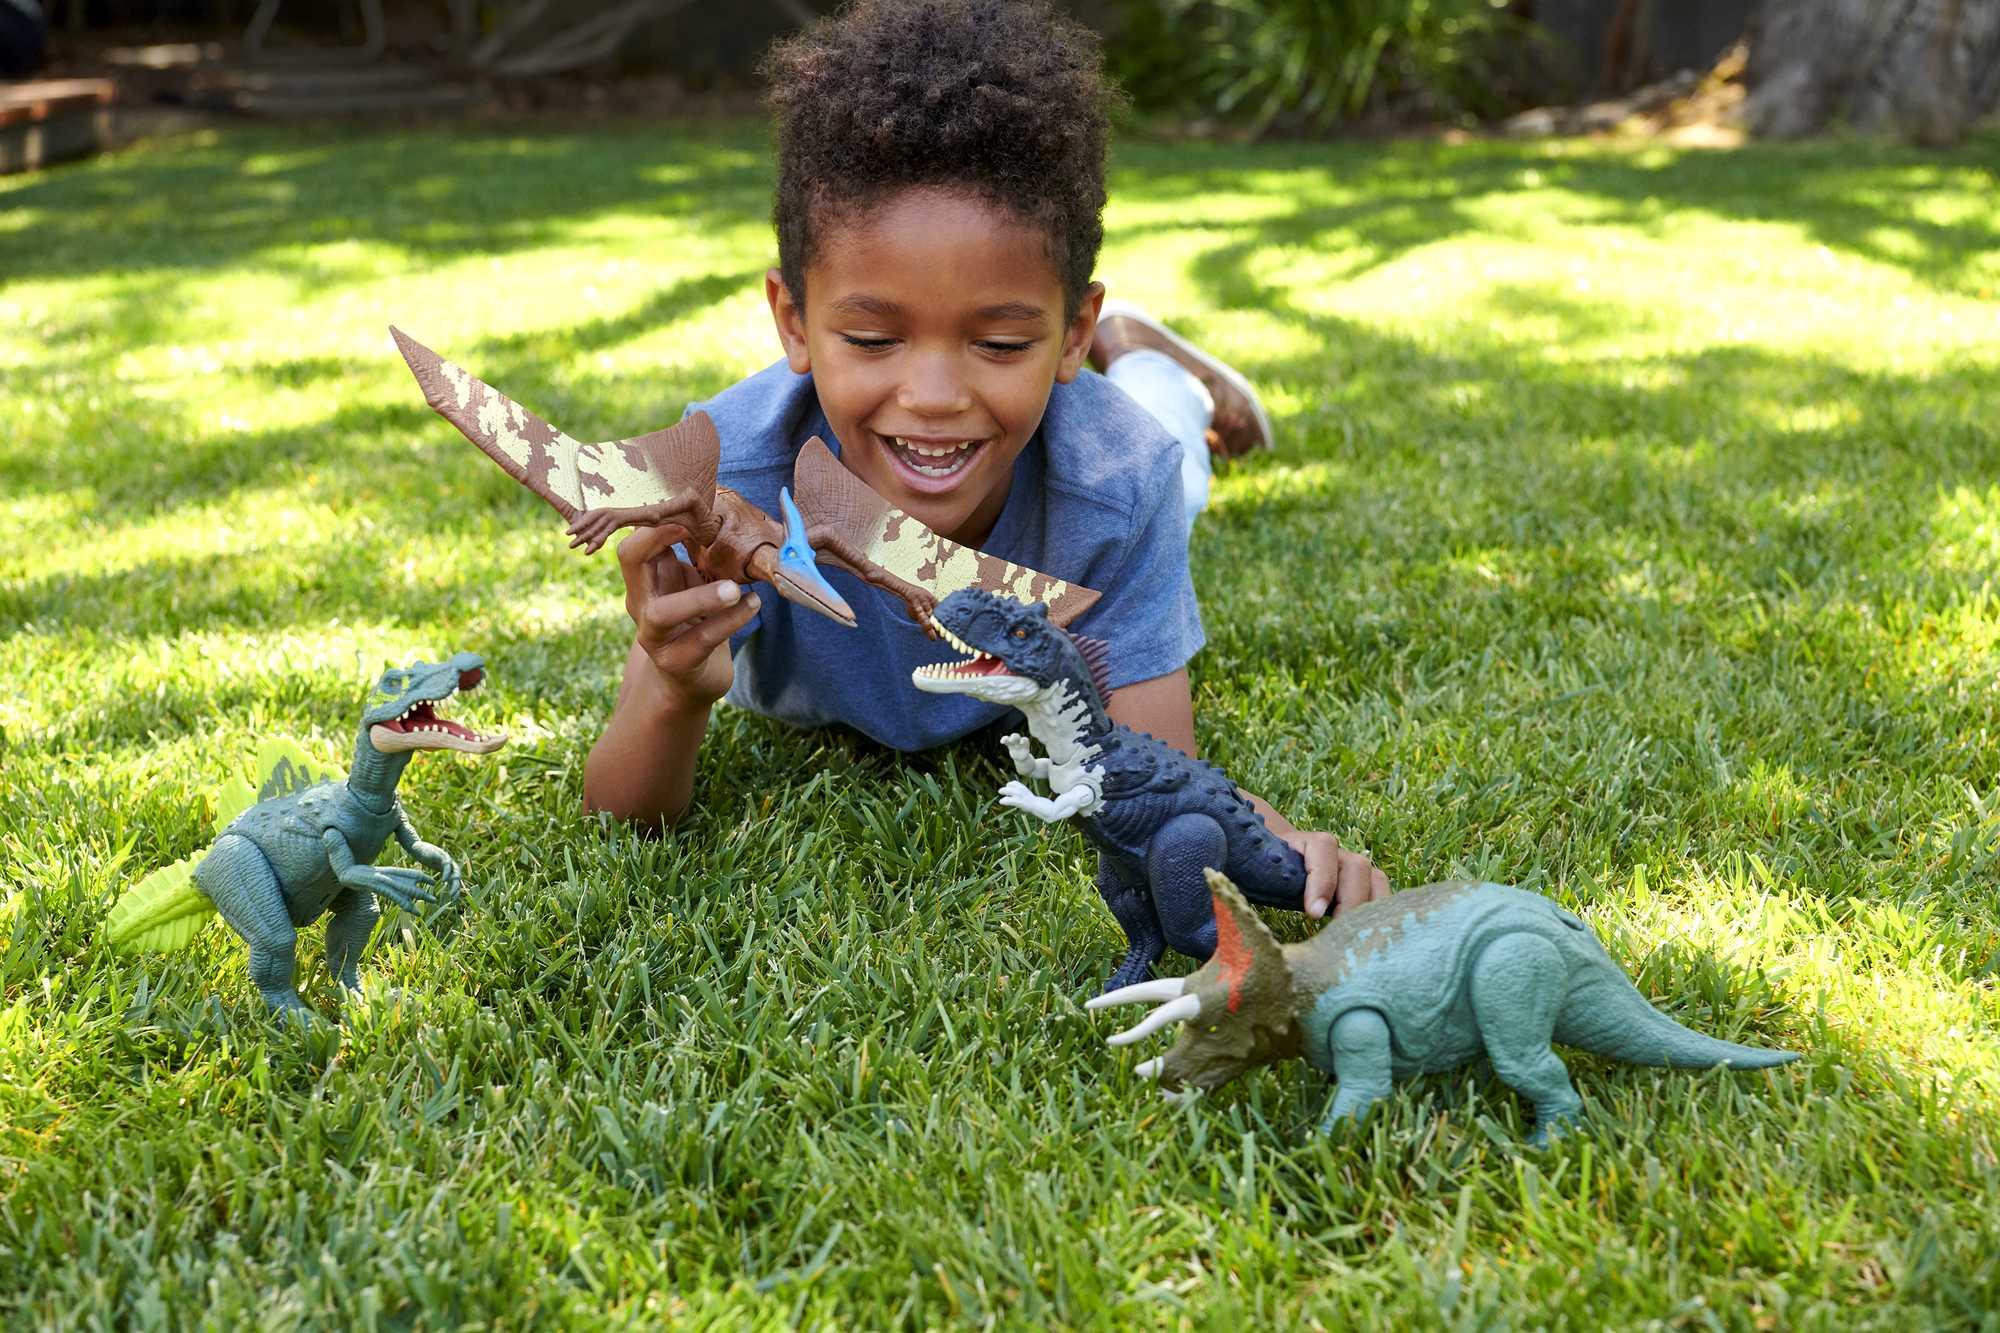 Mattel  Jurassic World HDX42 action figure giocattolo 